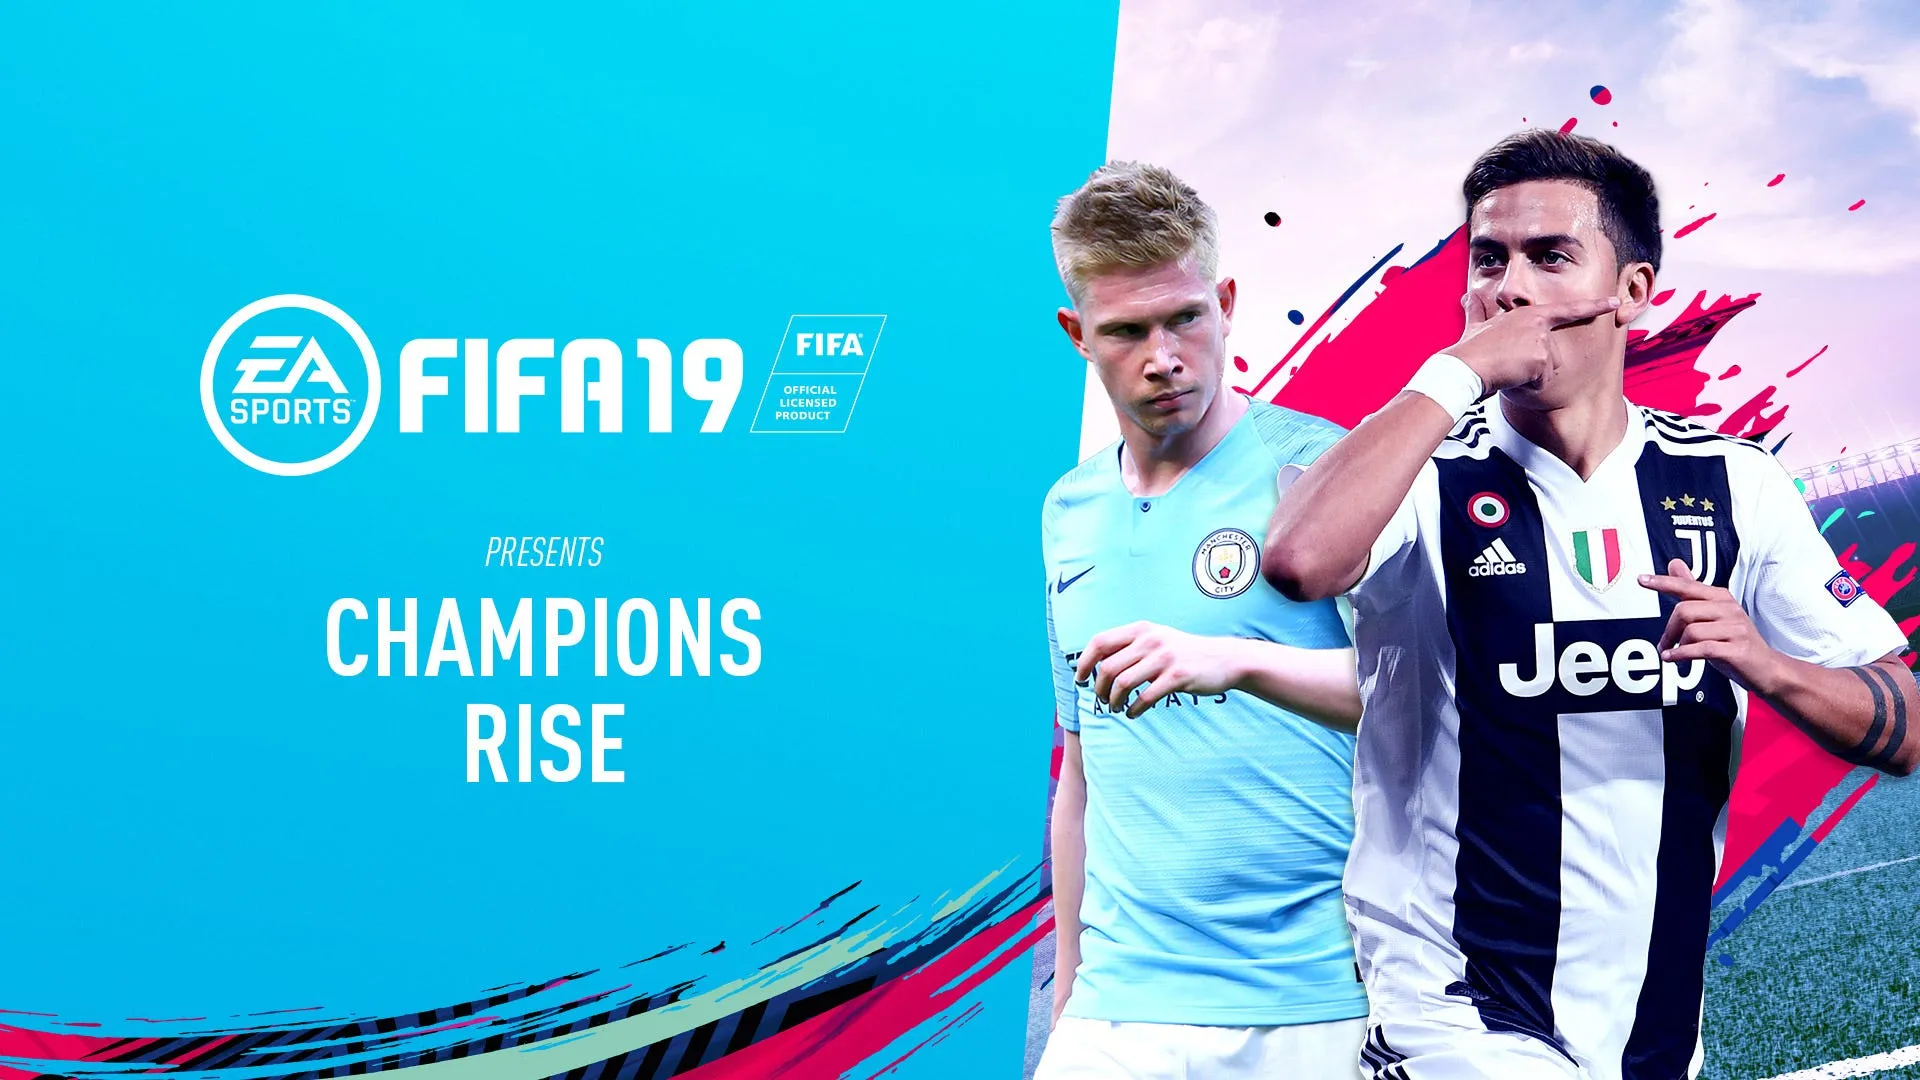 Fifa champions. FIFA 19. FIFA 19 presents Champions Rise. Камавинга ФИФА 19. ФИФА 19 сюжет.